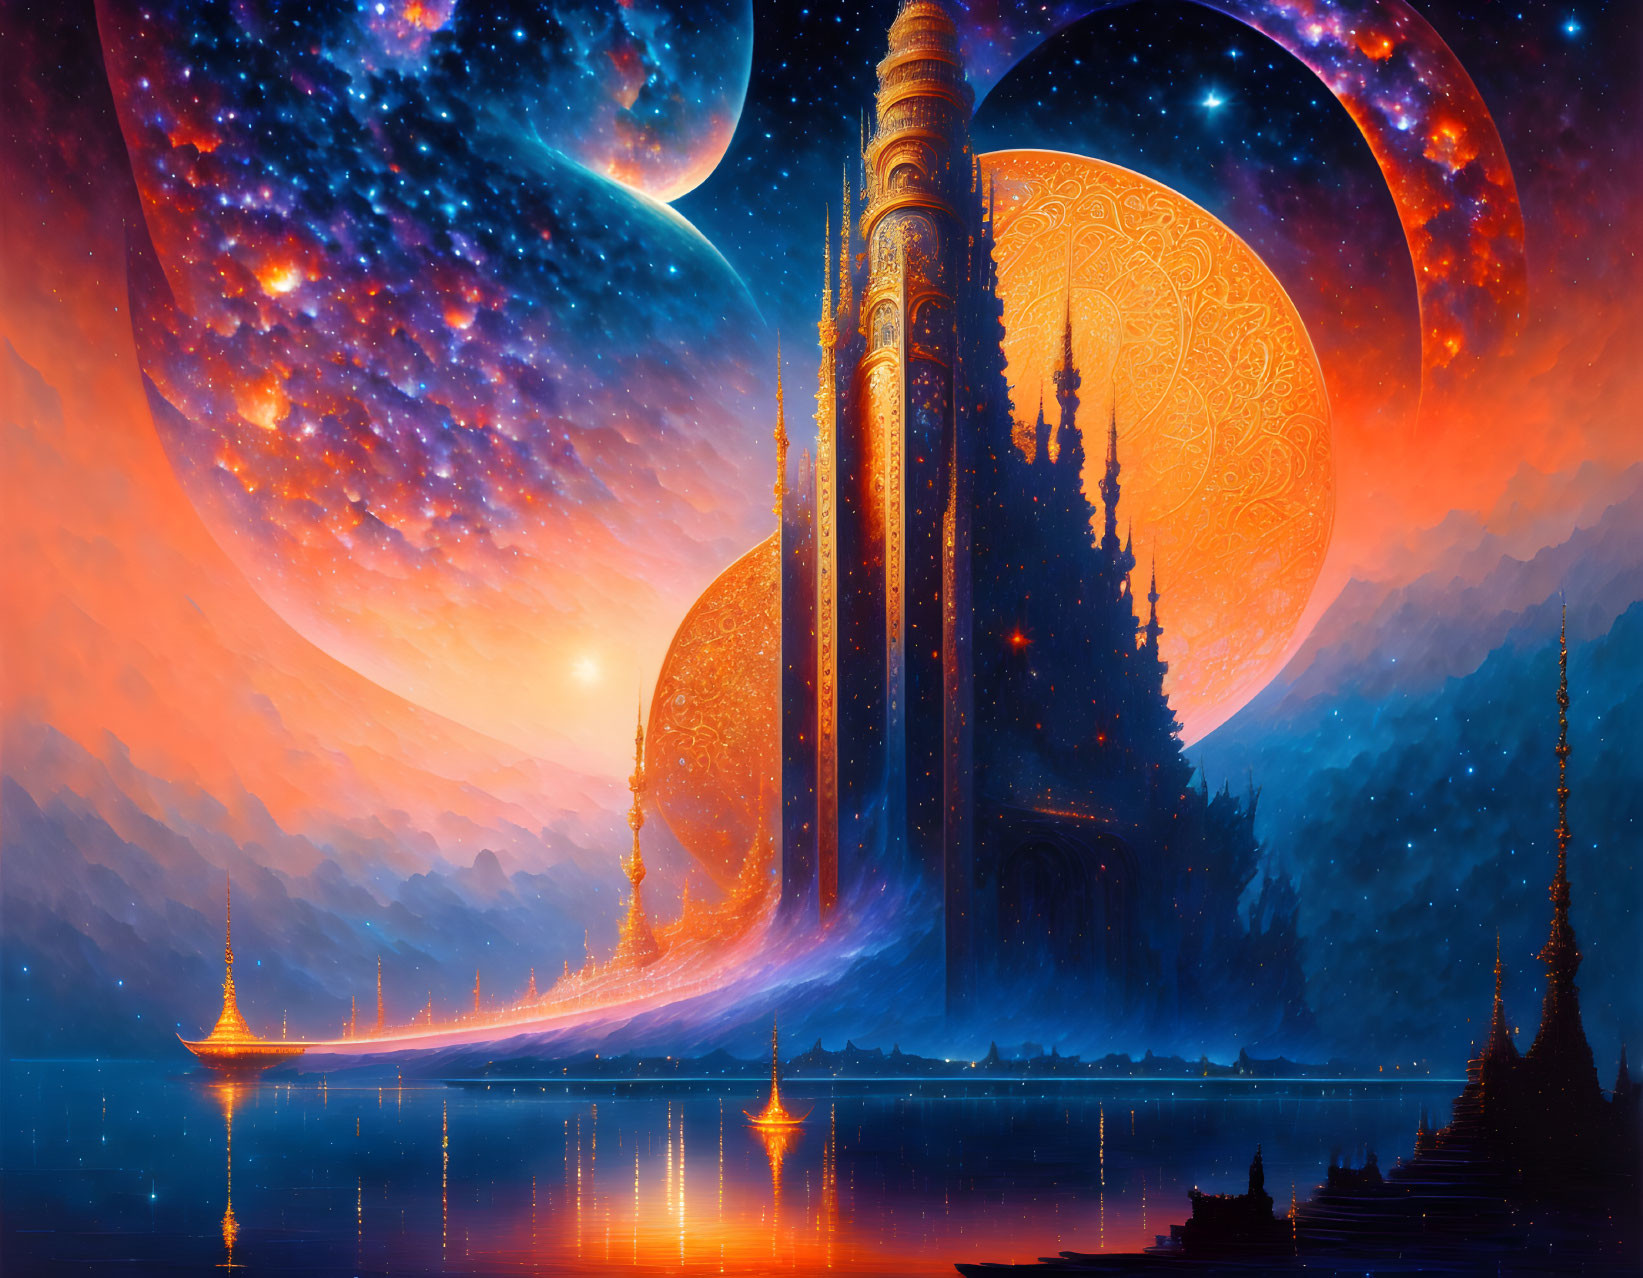 Fantastical digital artwork: ornate towers, cosmic backdrop